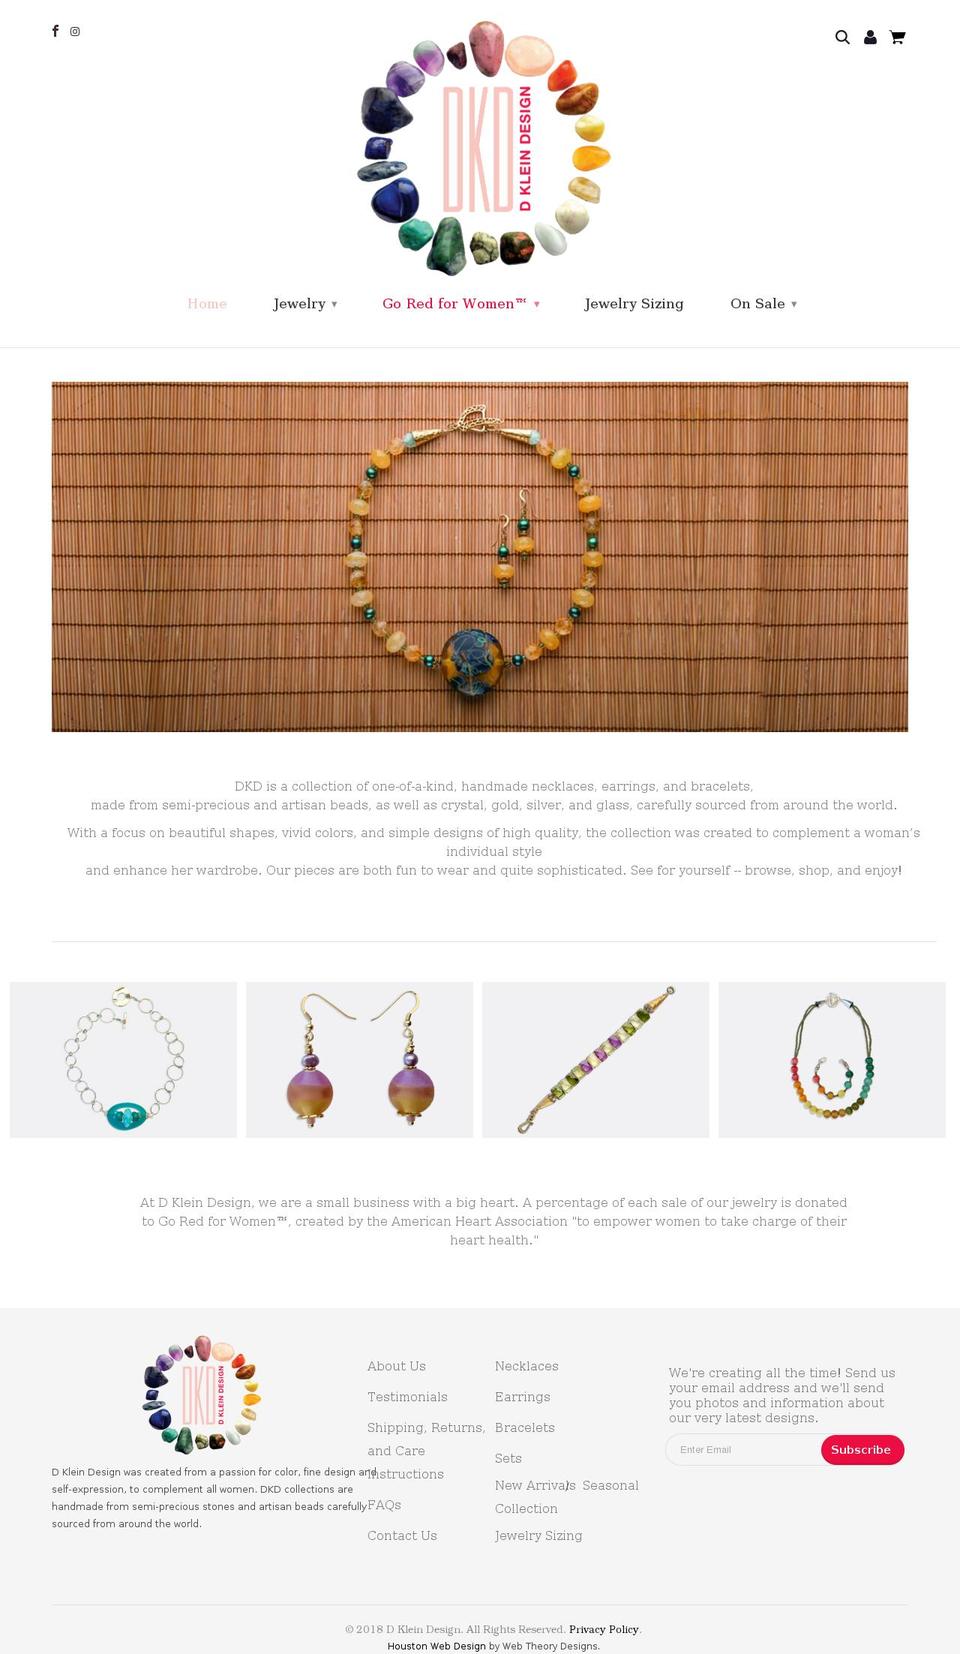 dkleinjewelry.design shopify website screenshot